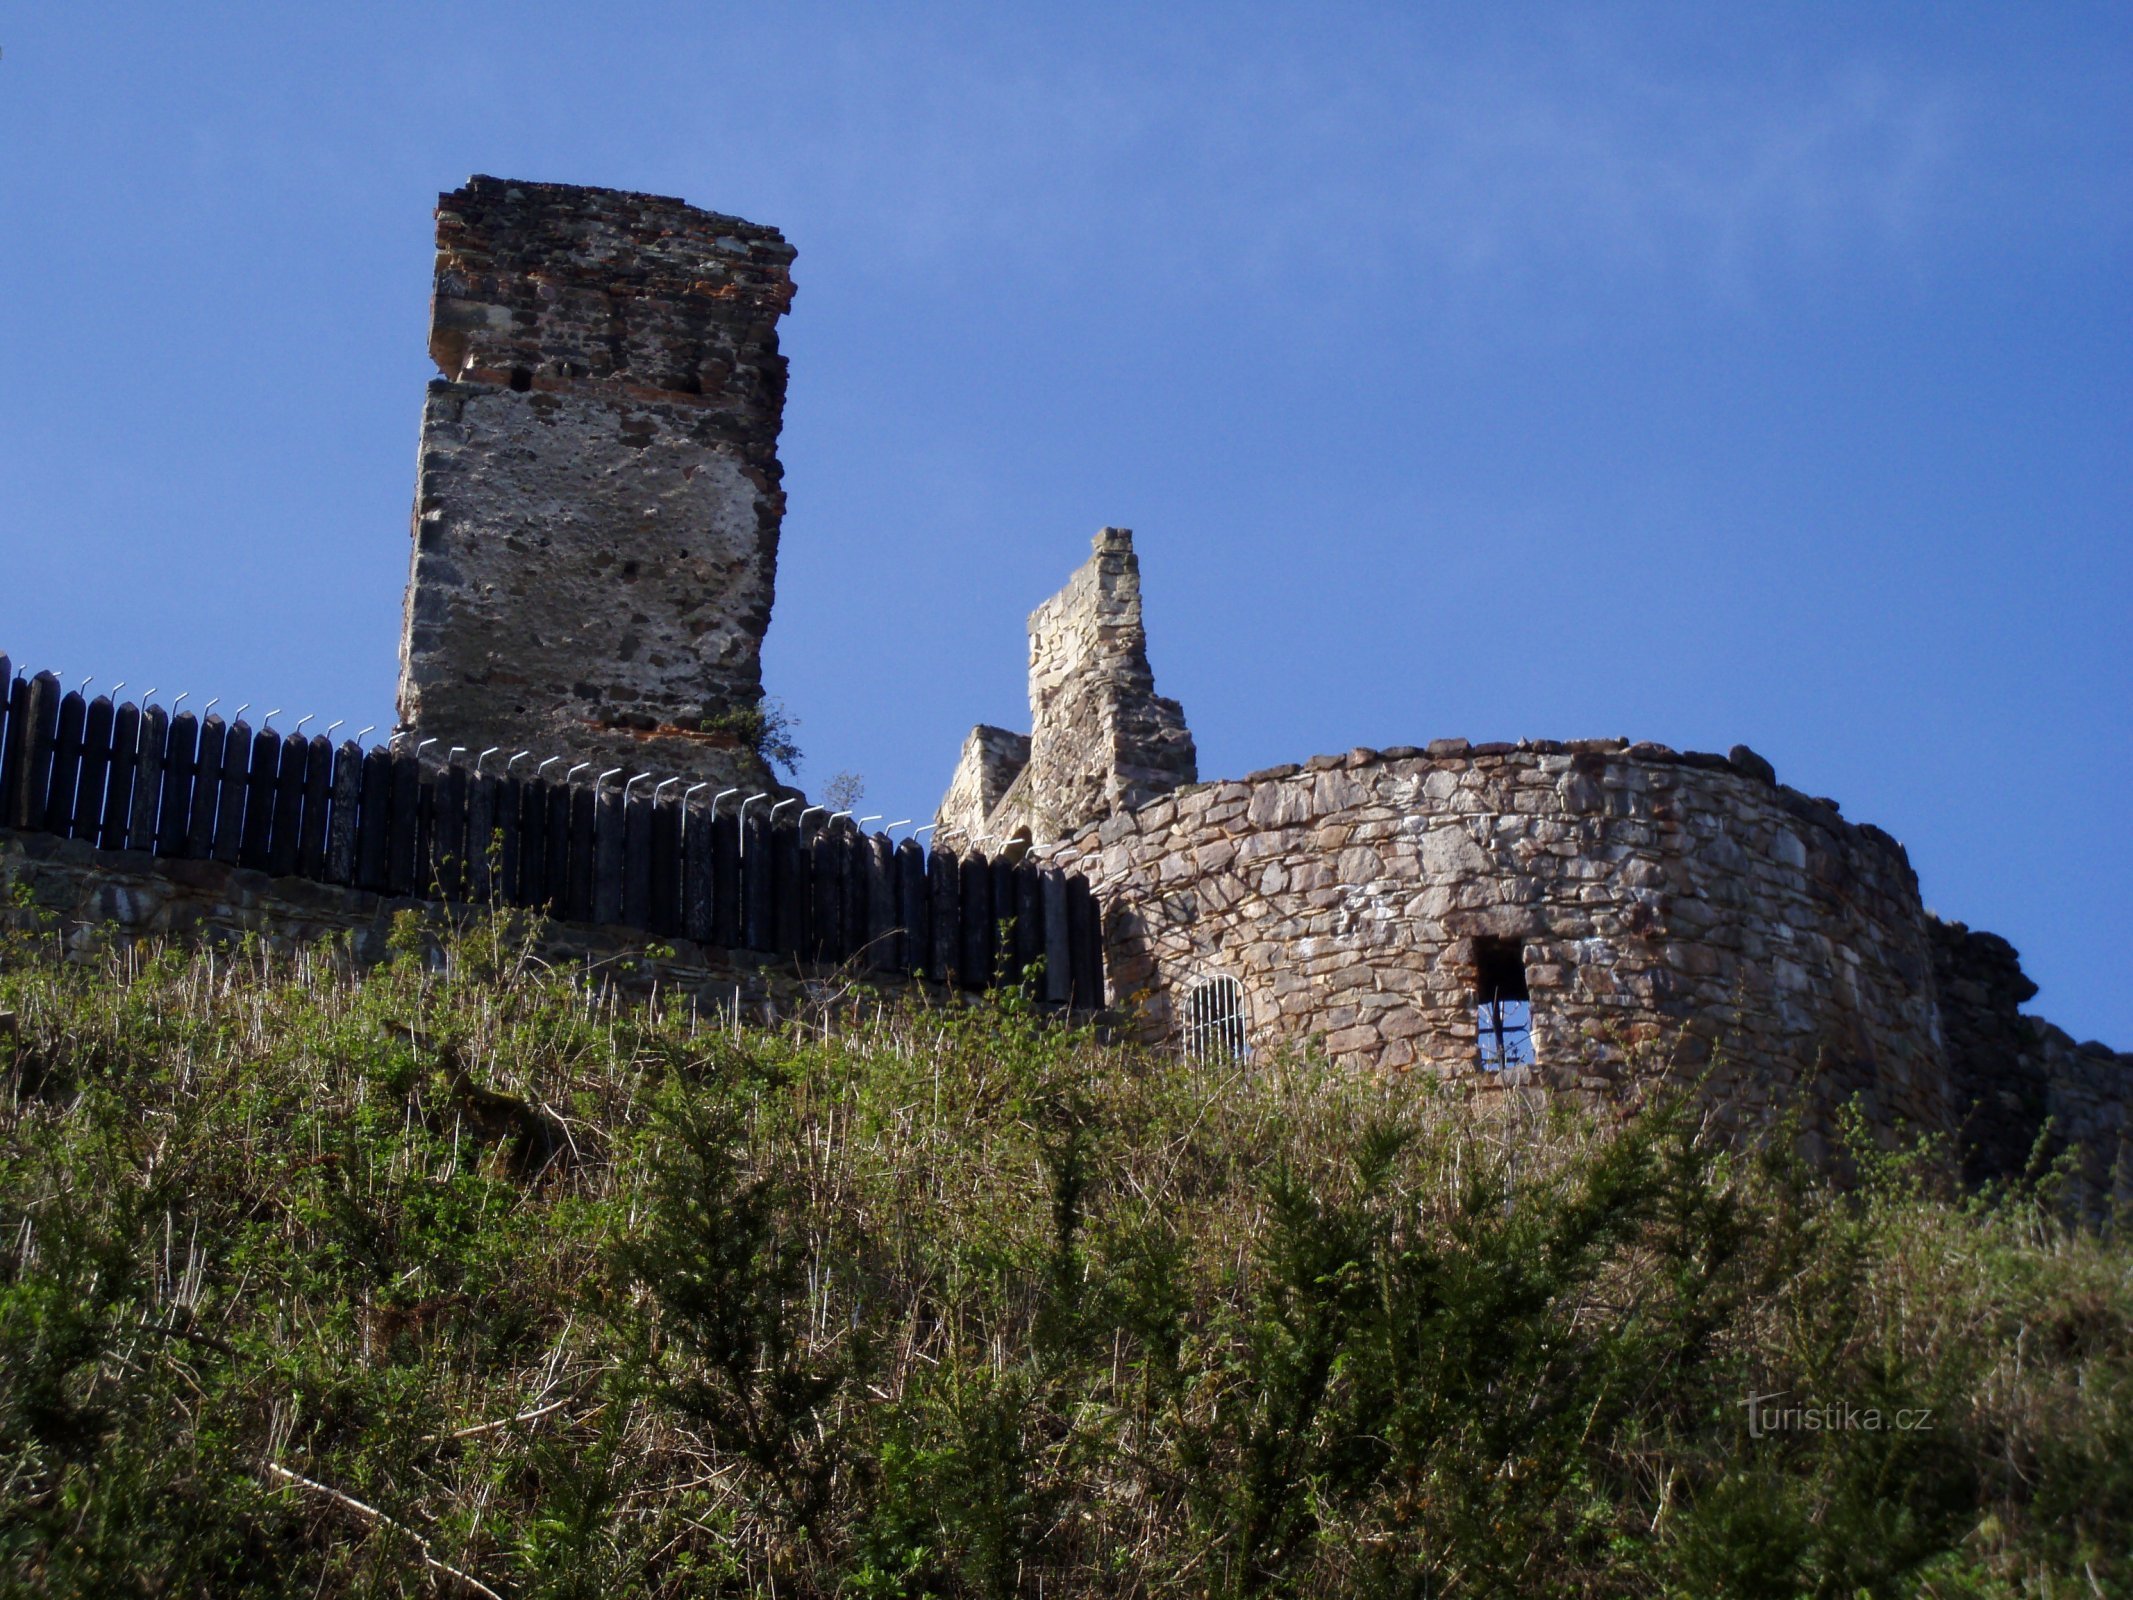 Dvorac (Potštejn)